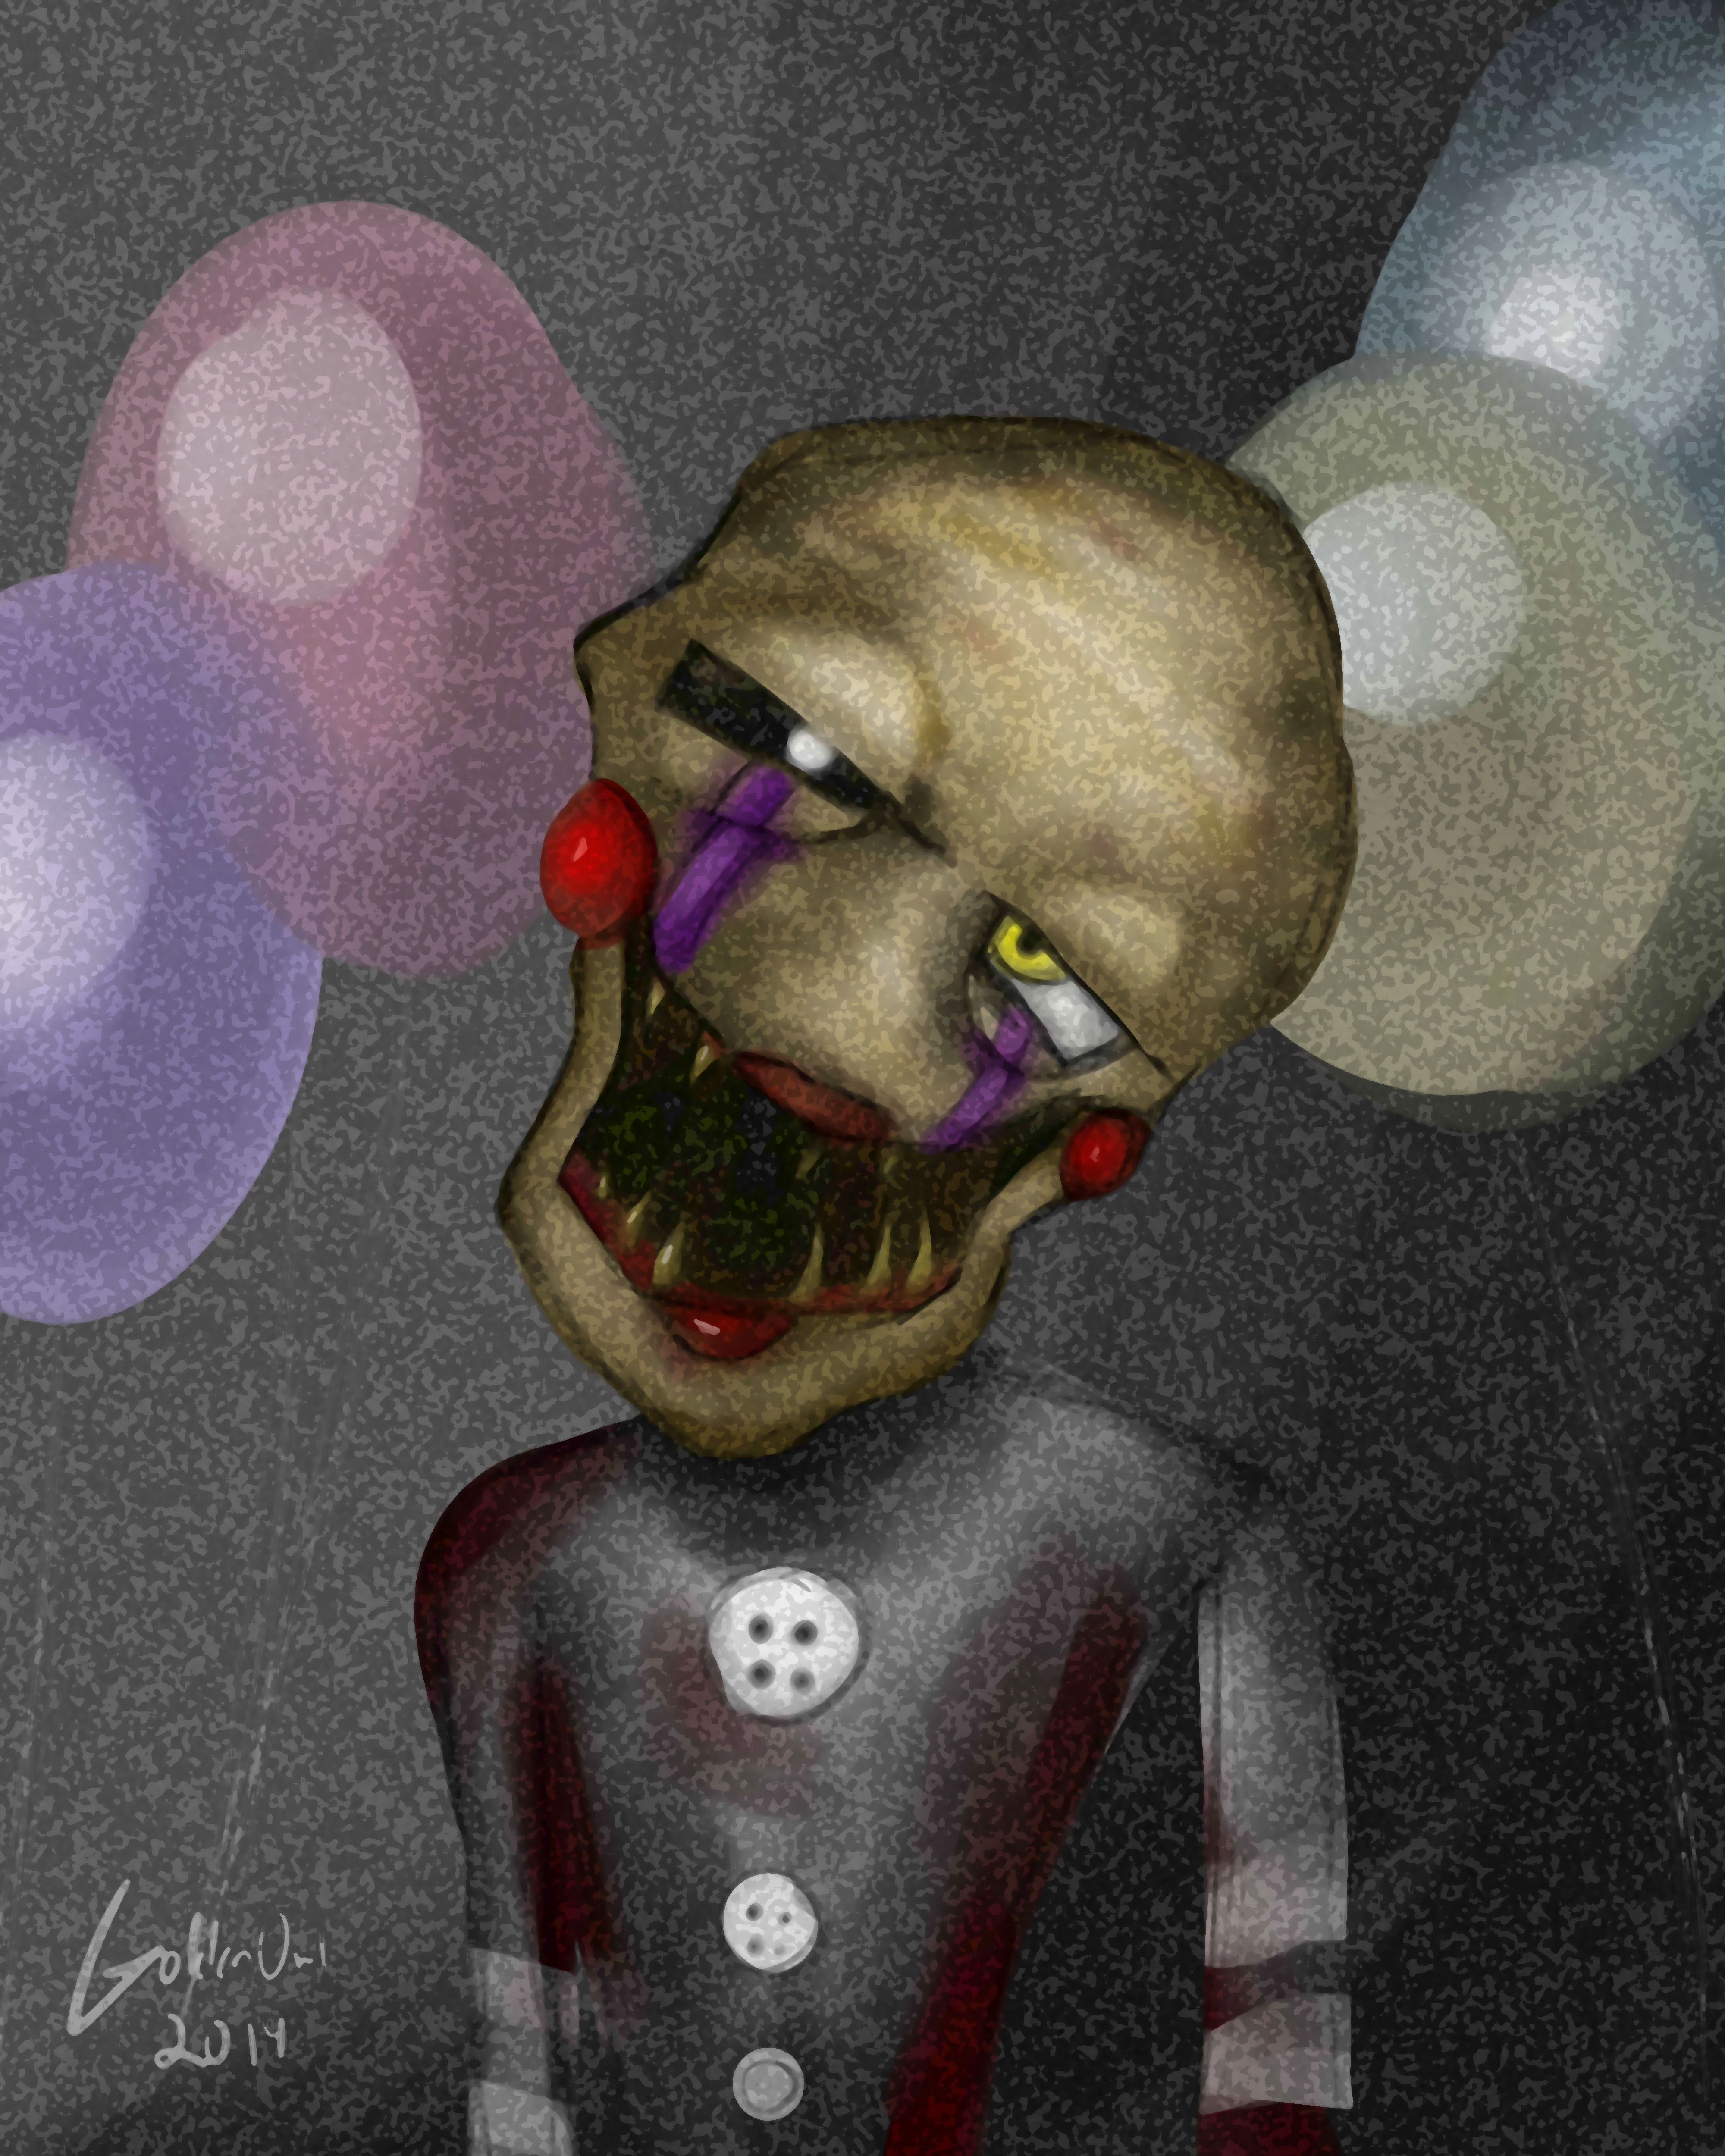 the puppet (fnaf) by finexplayz on DeviantArt